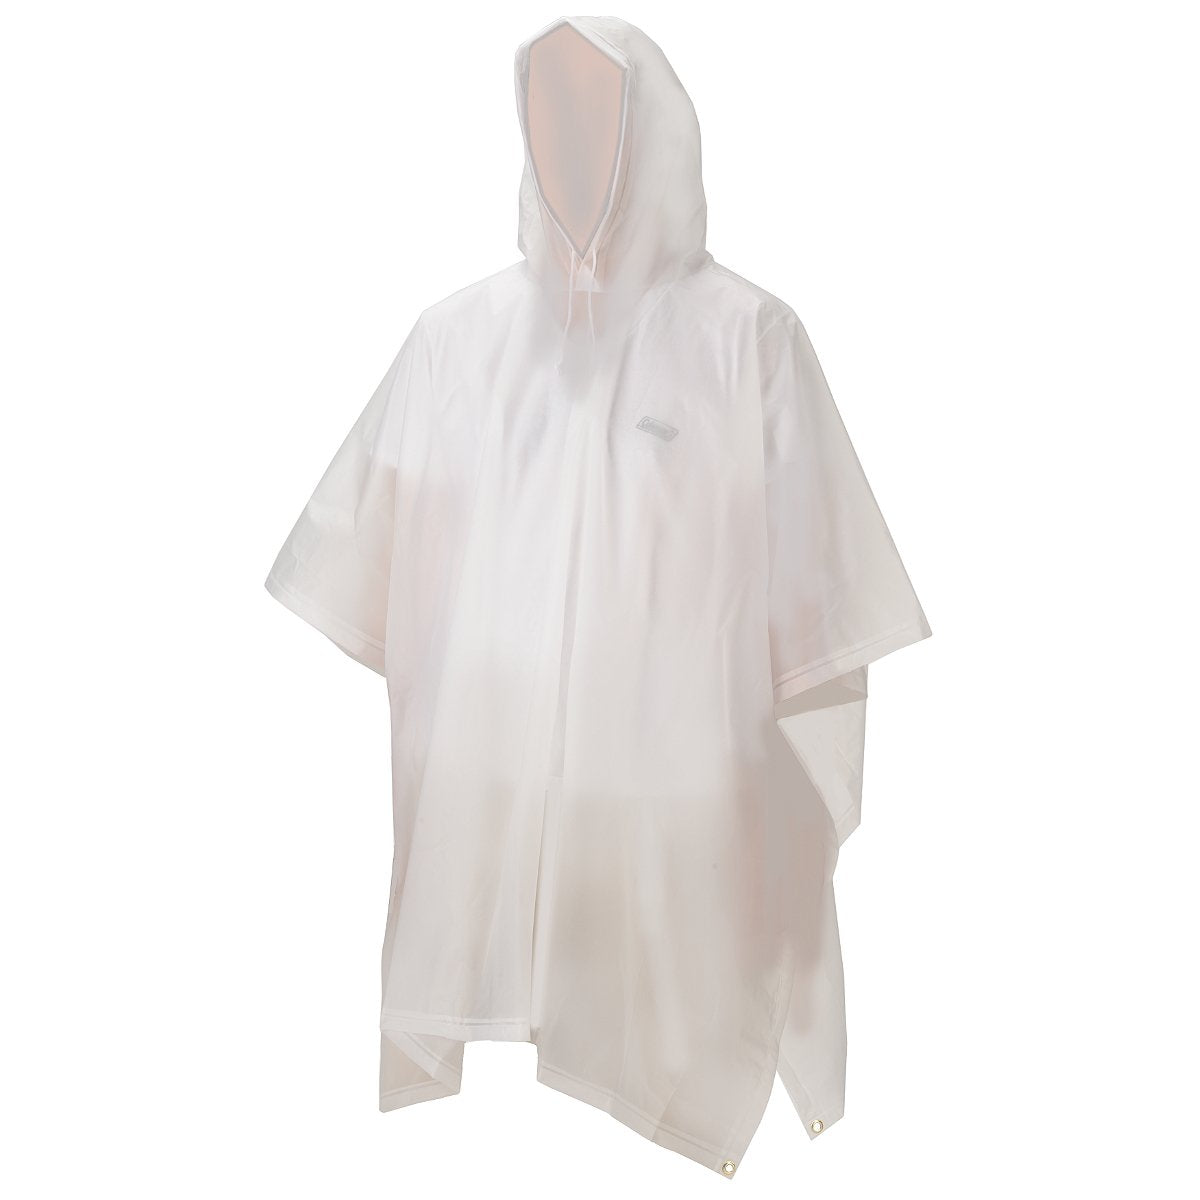 Coleman Lightweight PVC Rain Suit, Clear, Medium